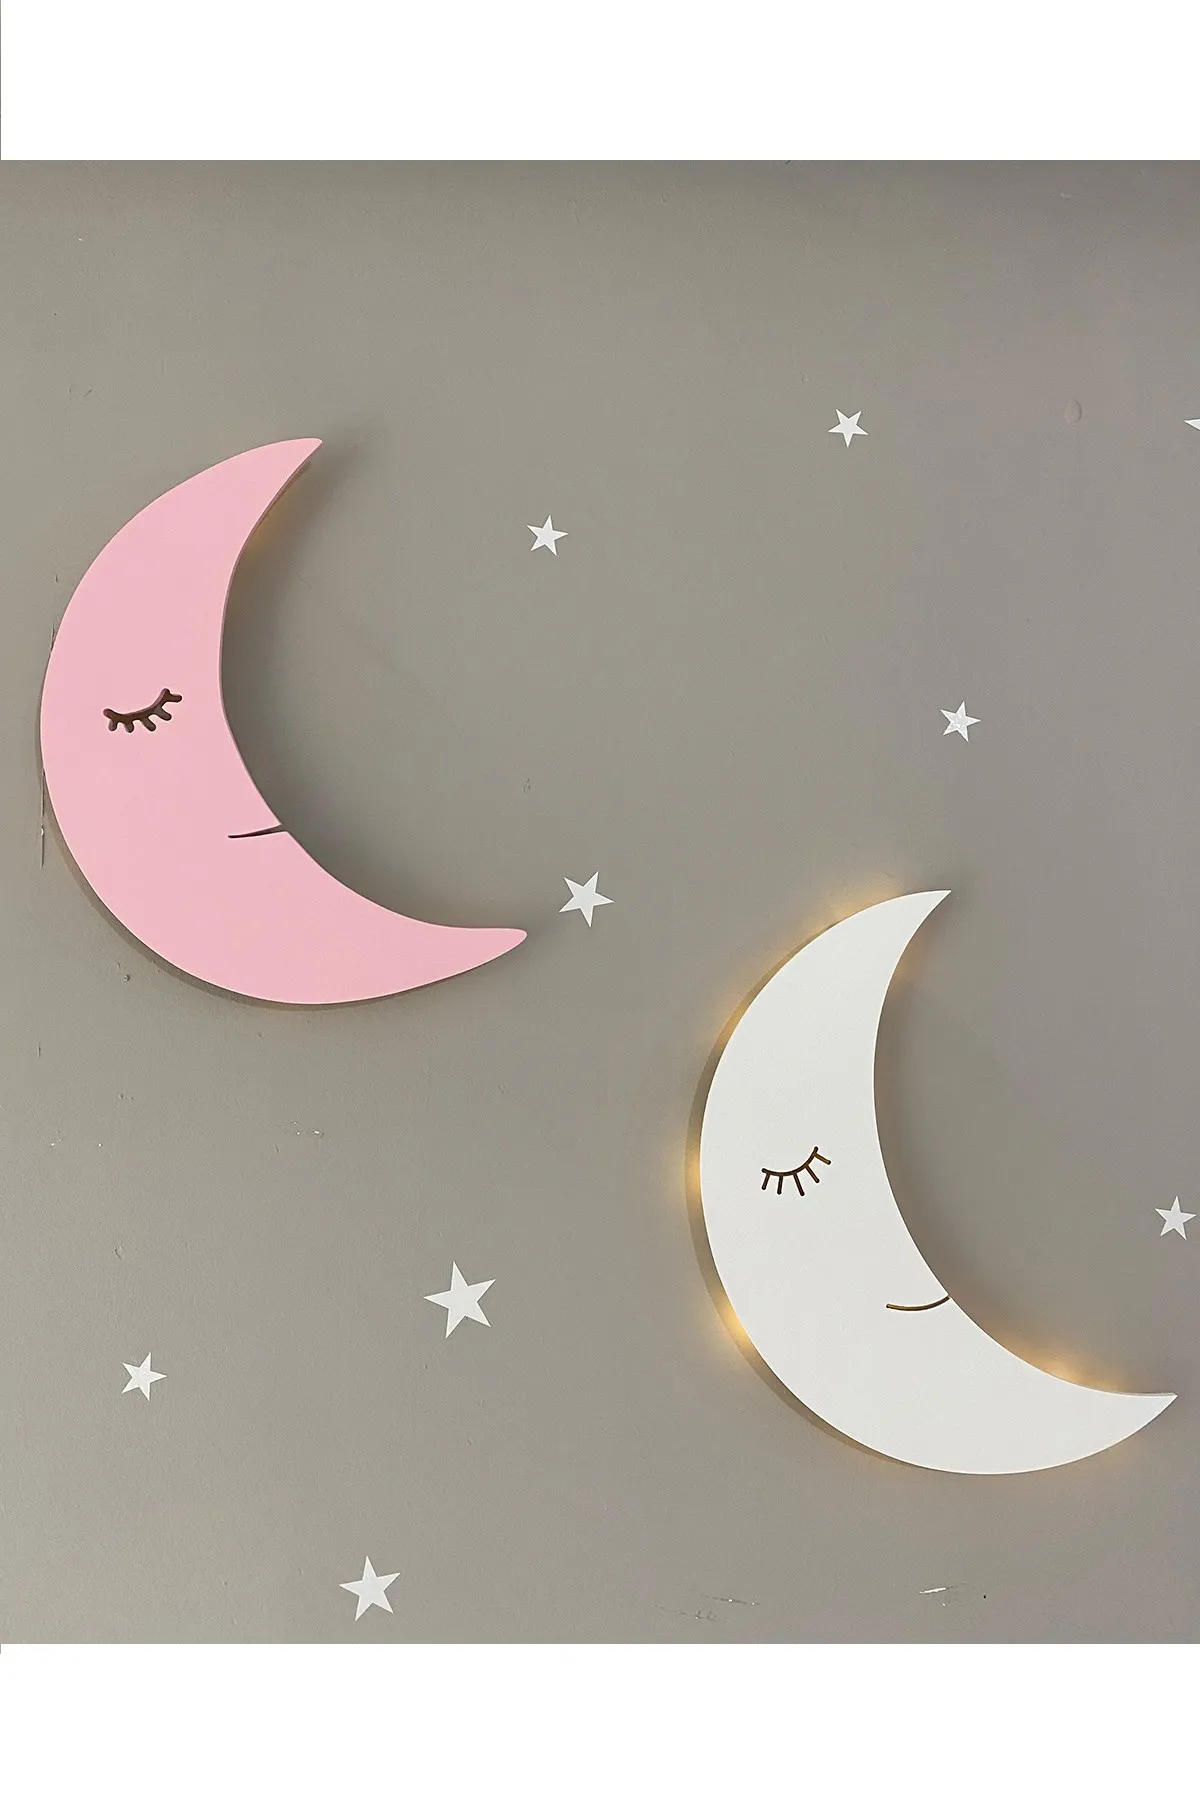 Jaju Baby White Moon and Pink Moon Night Light  Lighting